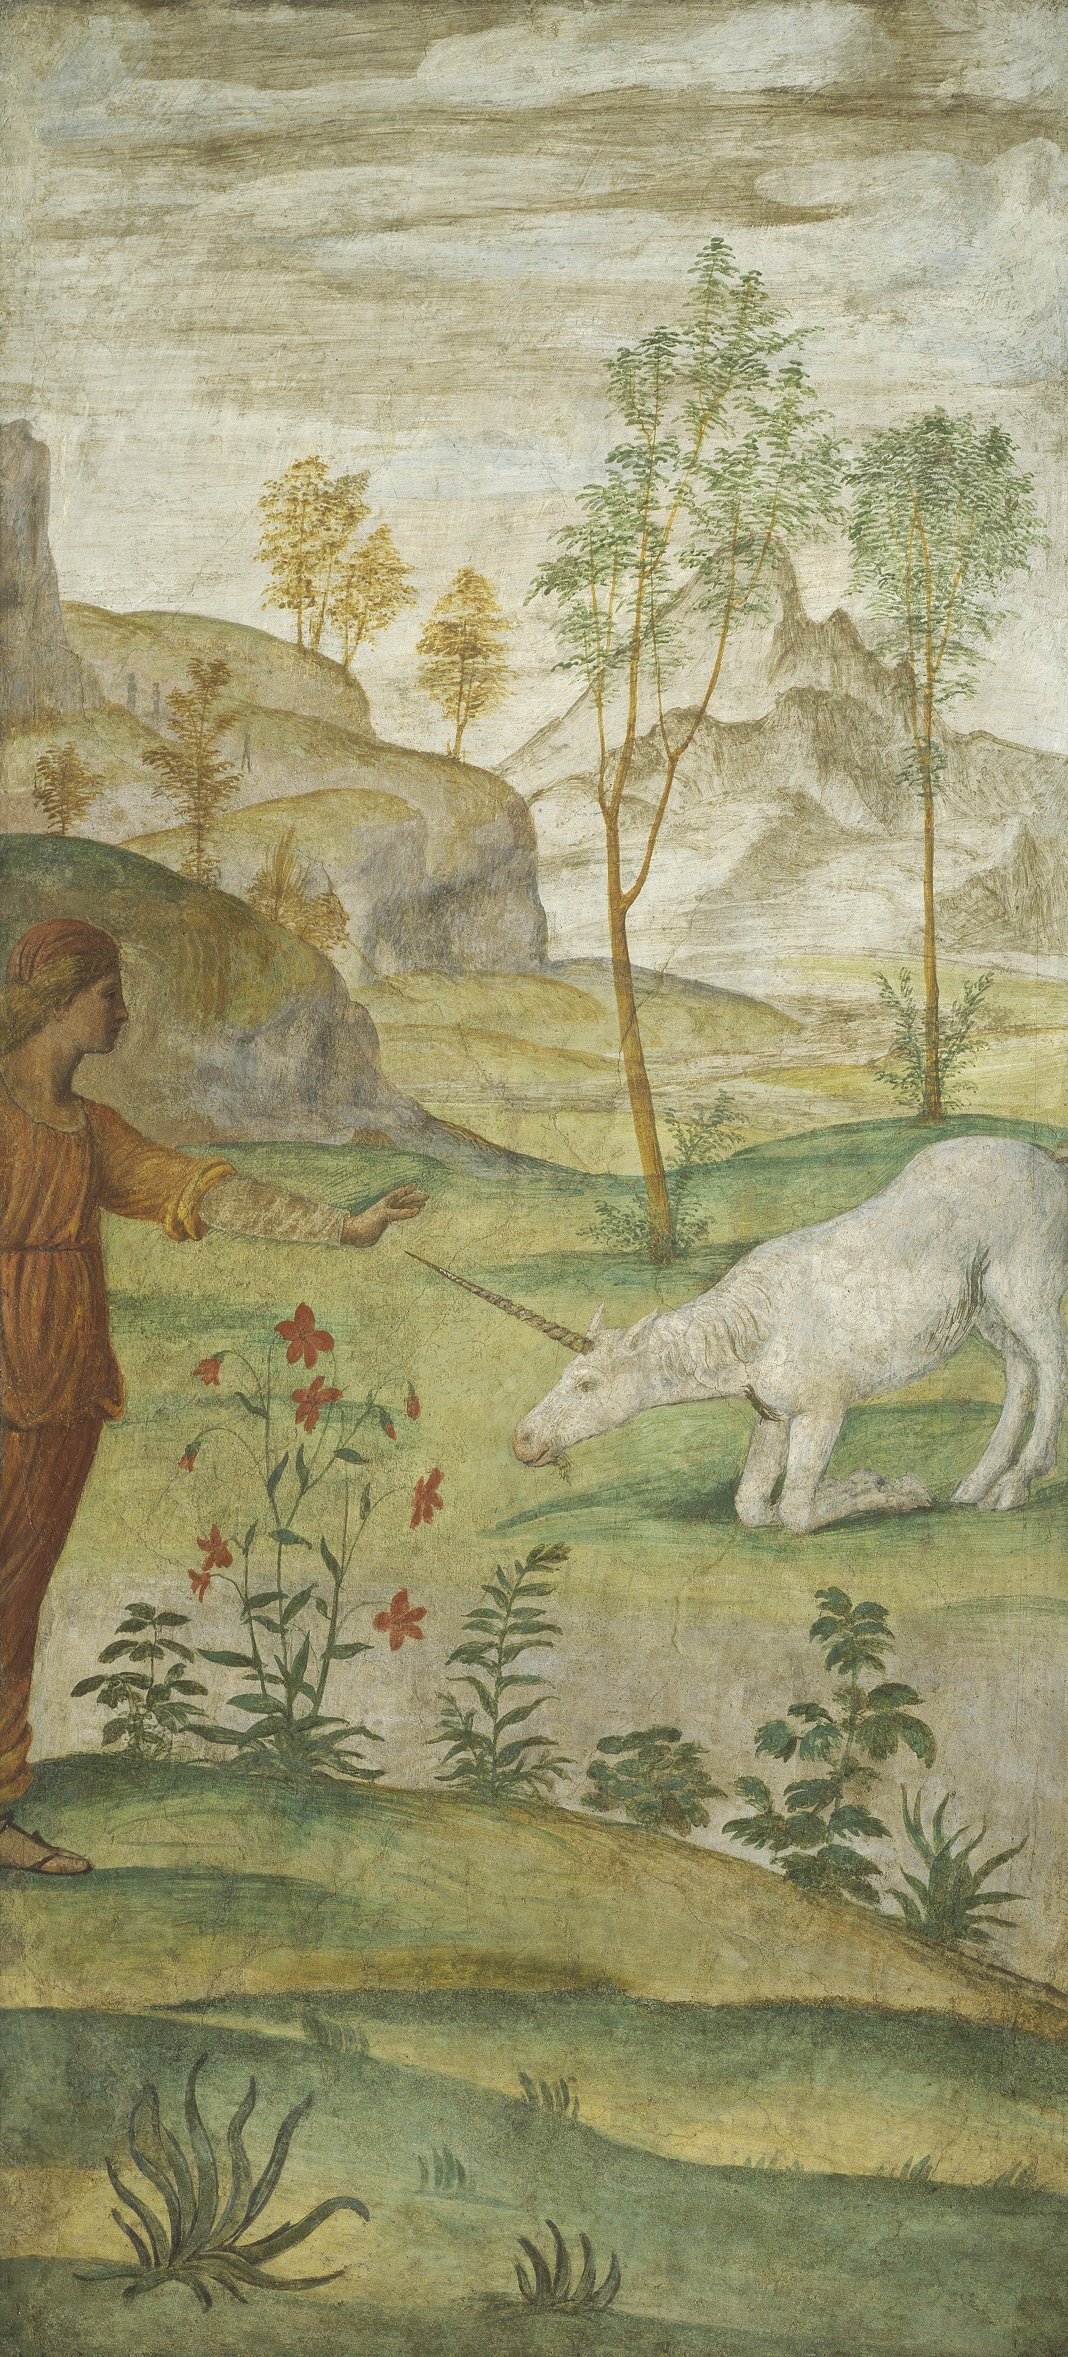 Procris and the Unicorn (c. 1520-1522)